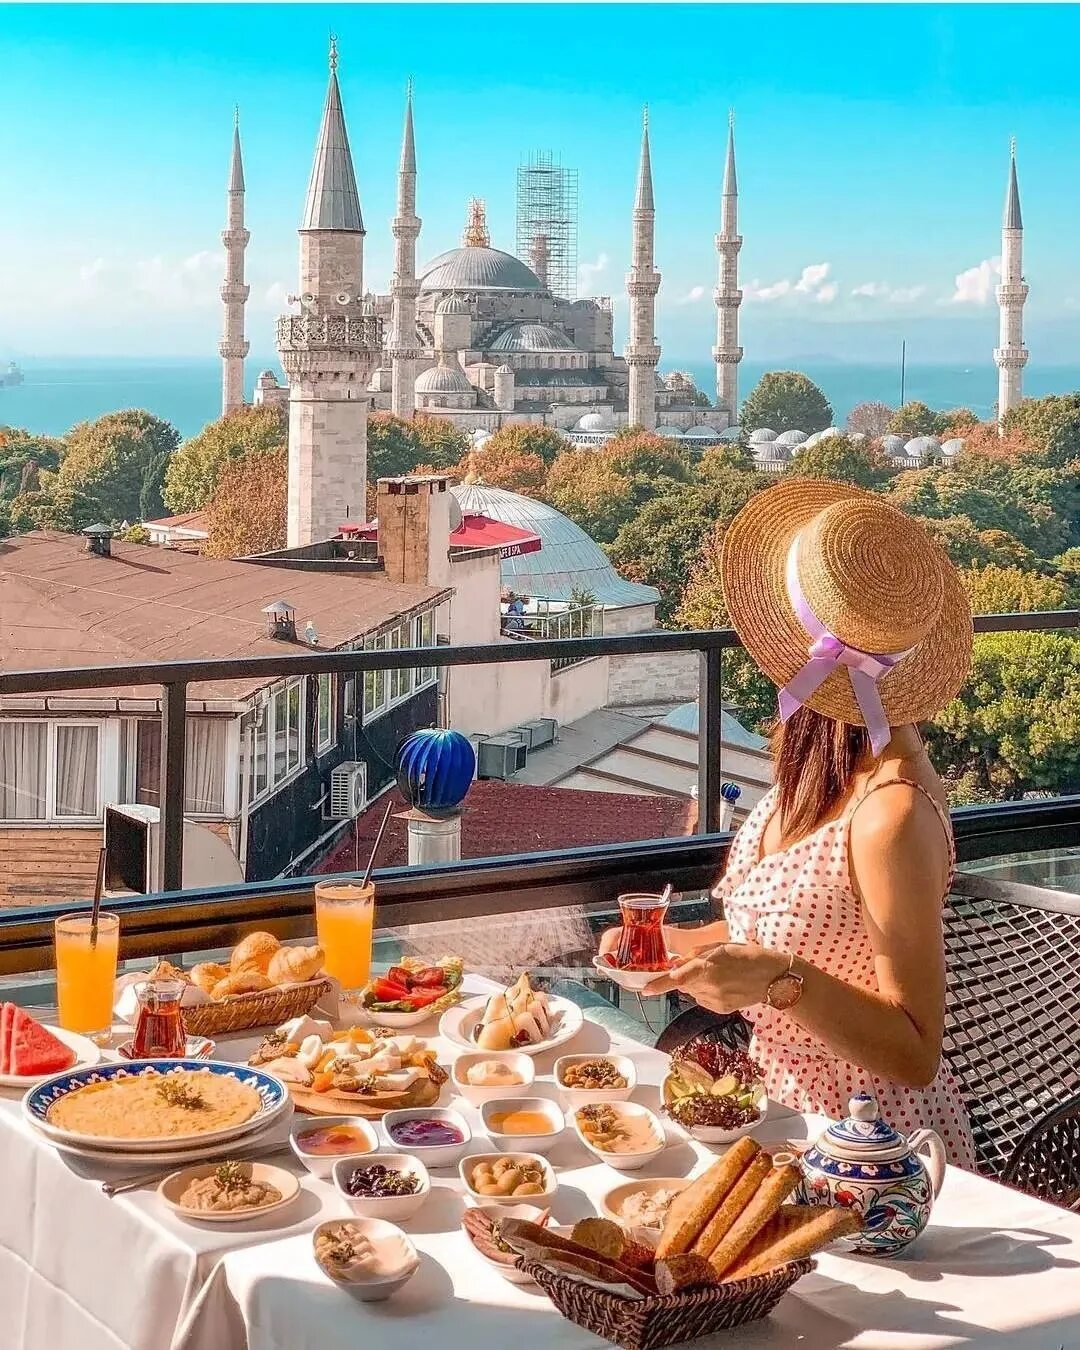 Travel турция. Стамбул туризм. Стамбул туристы. Турецкий завтрак. Турецкий завтрак с видом на Султанахмет.